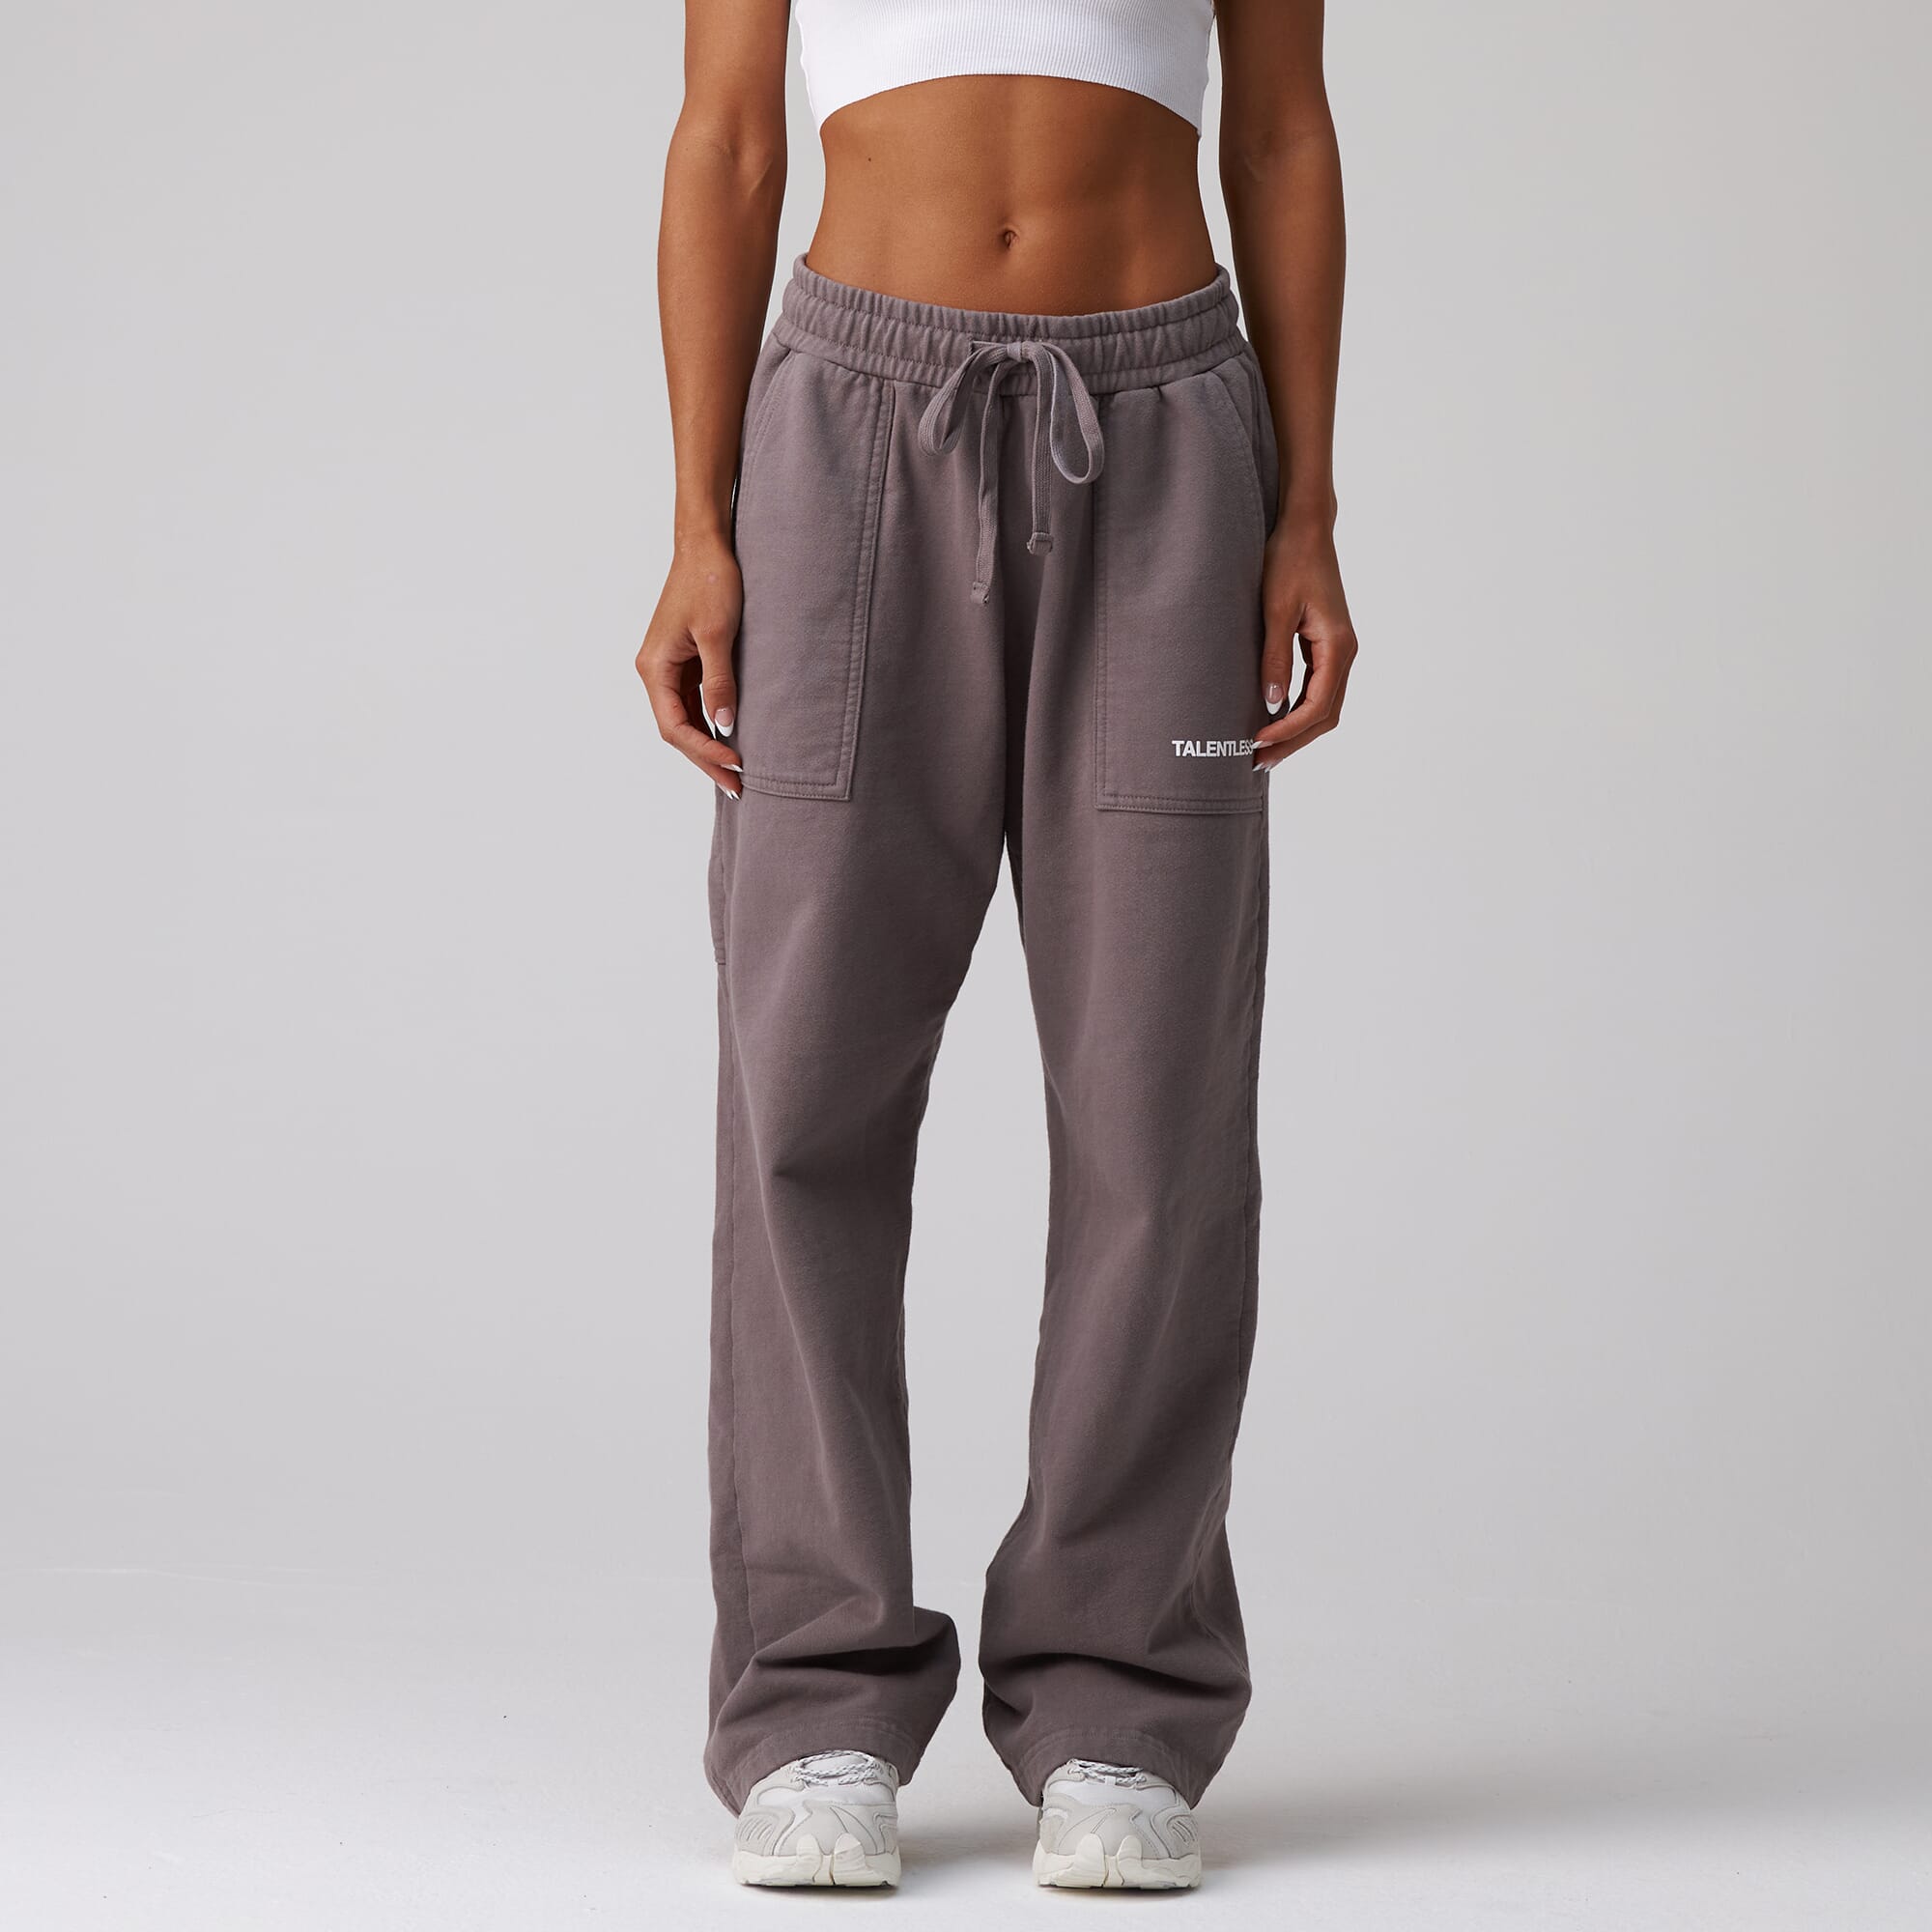 Lululemon Dance Studio Pants Green Size 2 - $70 (40% Off Retail